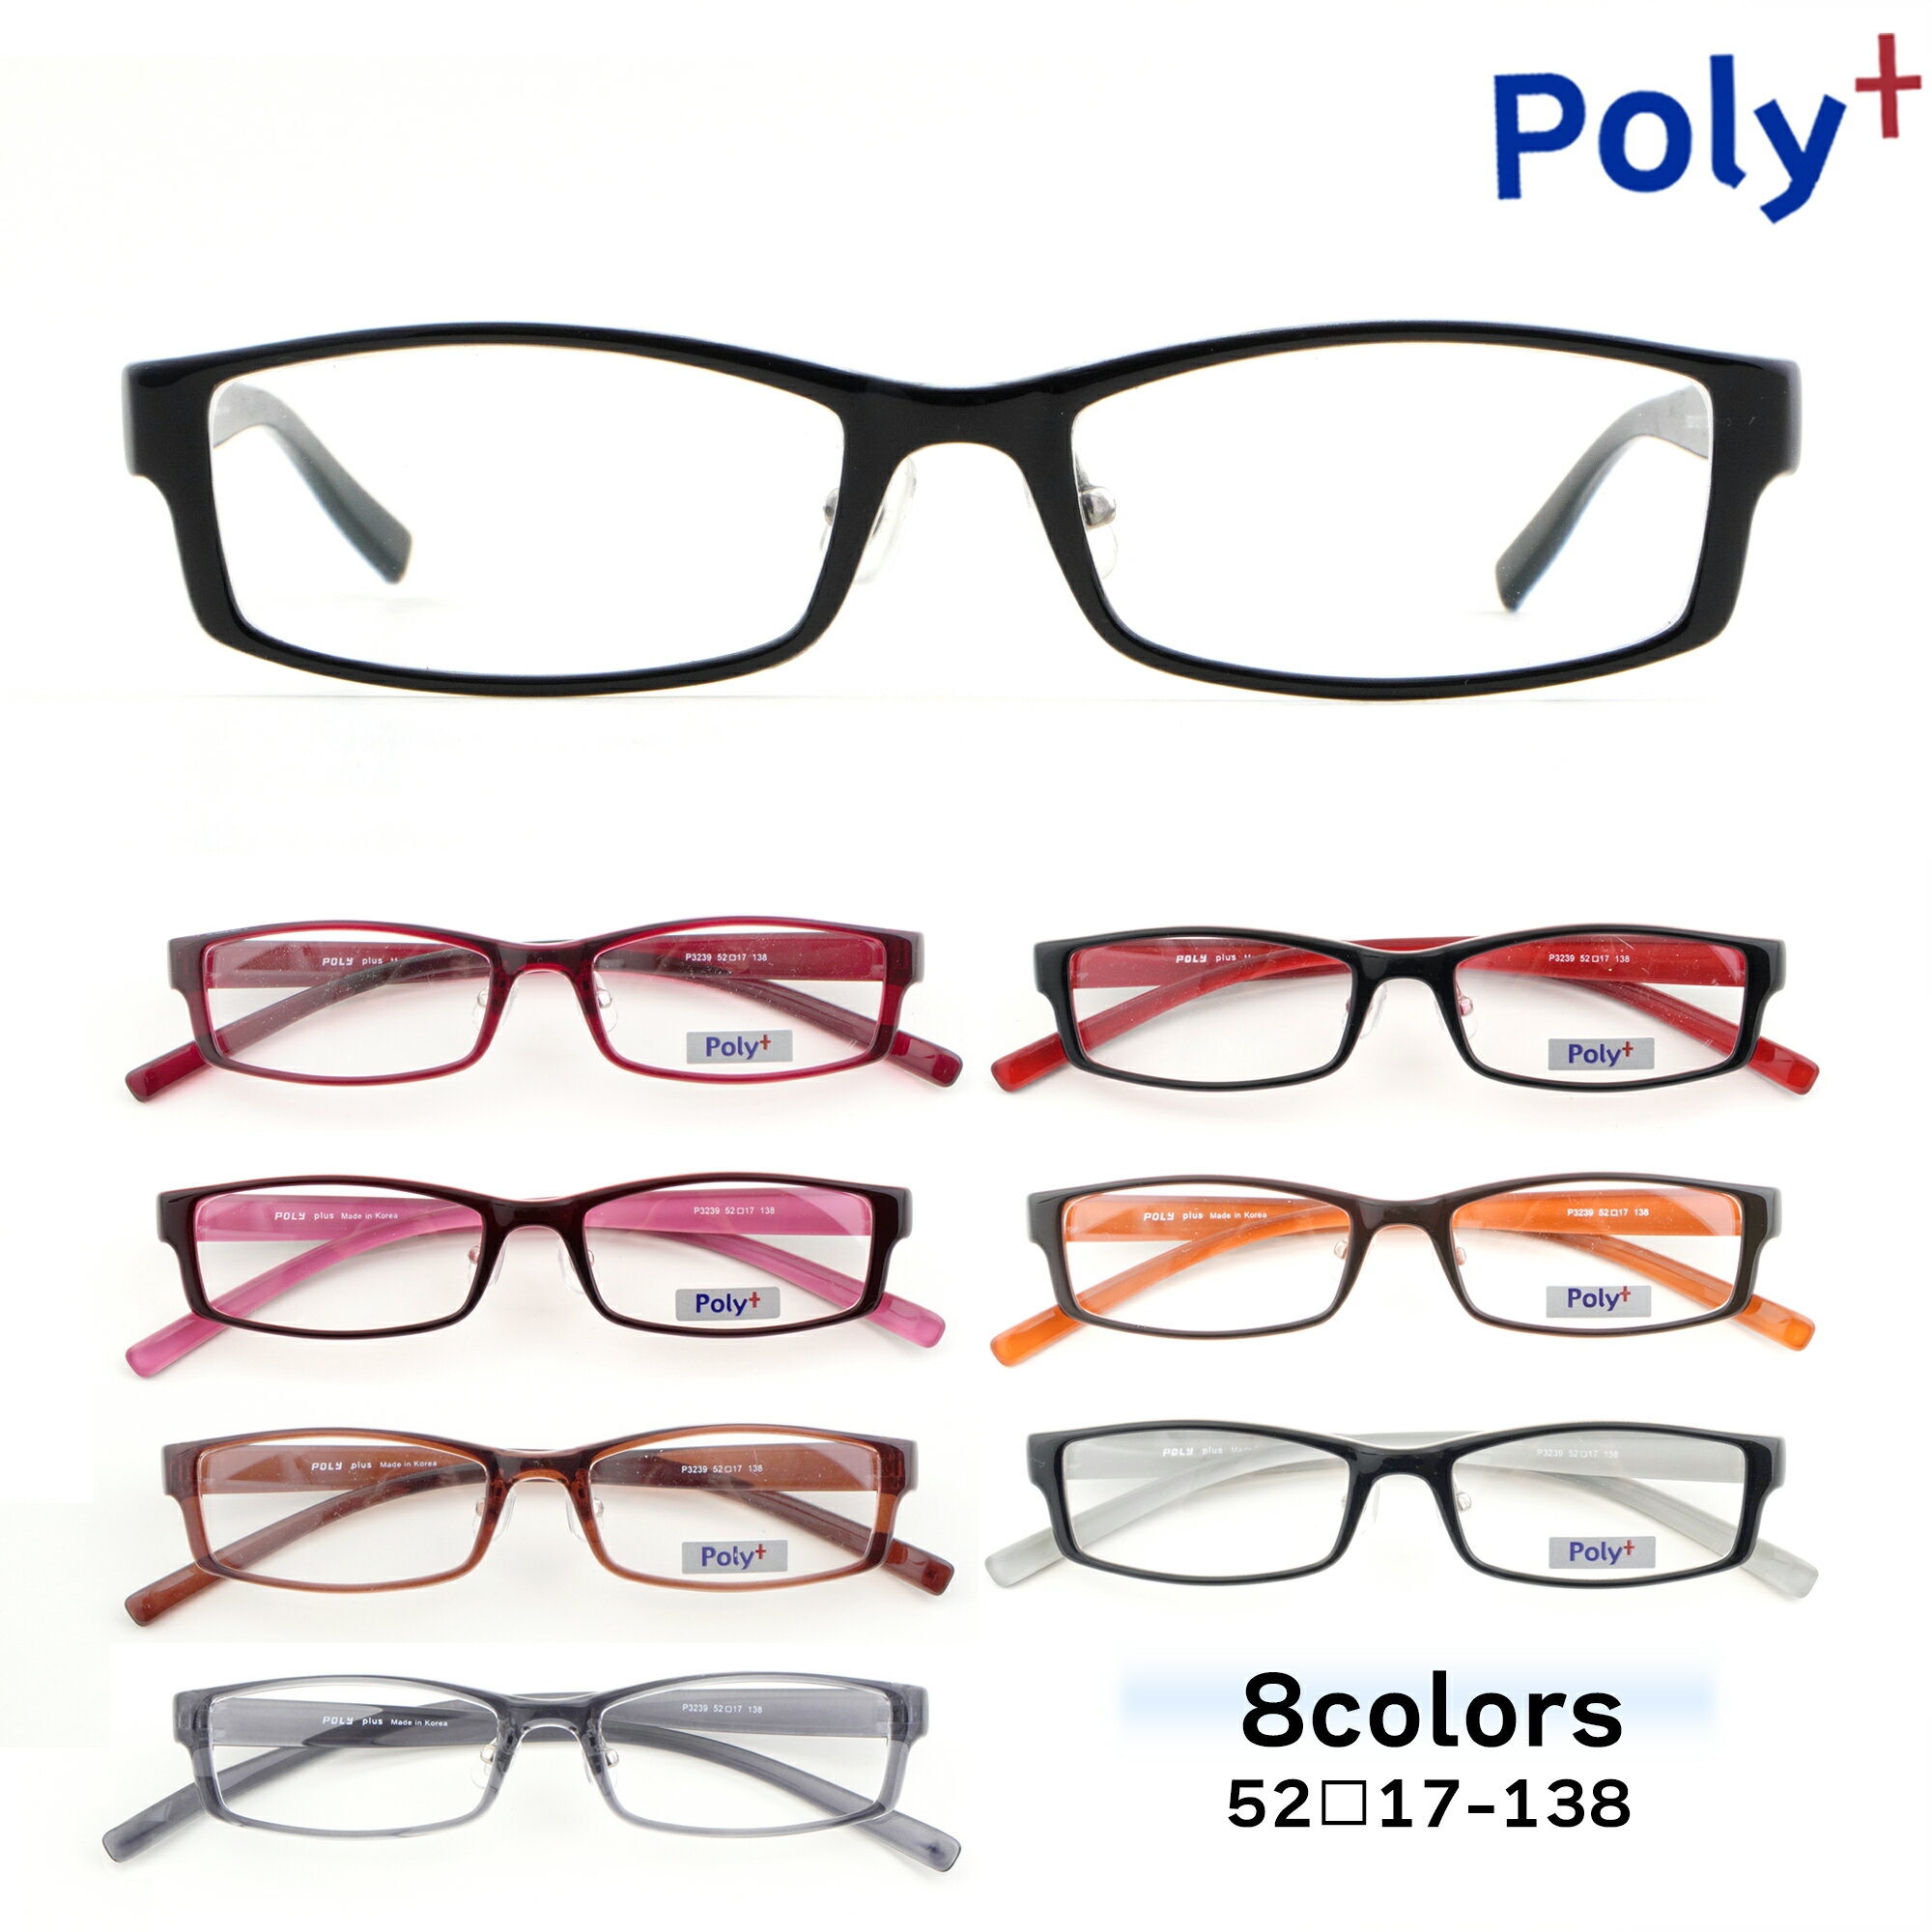 New open価格 メガネ 度付き polyフレーム P3239 度付きメガネ スクエア 1日～2日で発送 【HOYA HOLT】標準レンズ付き